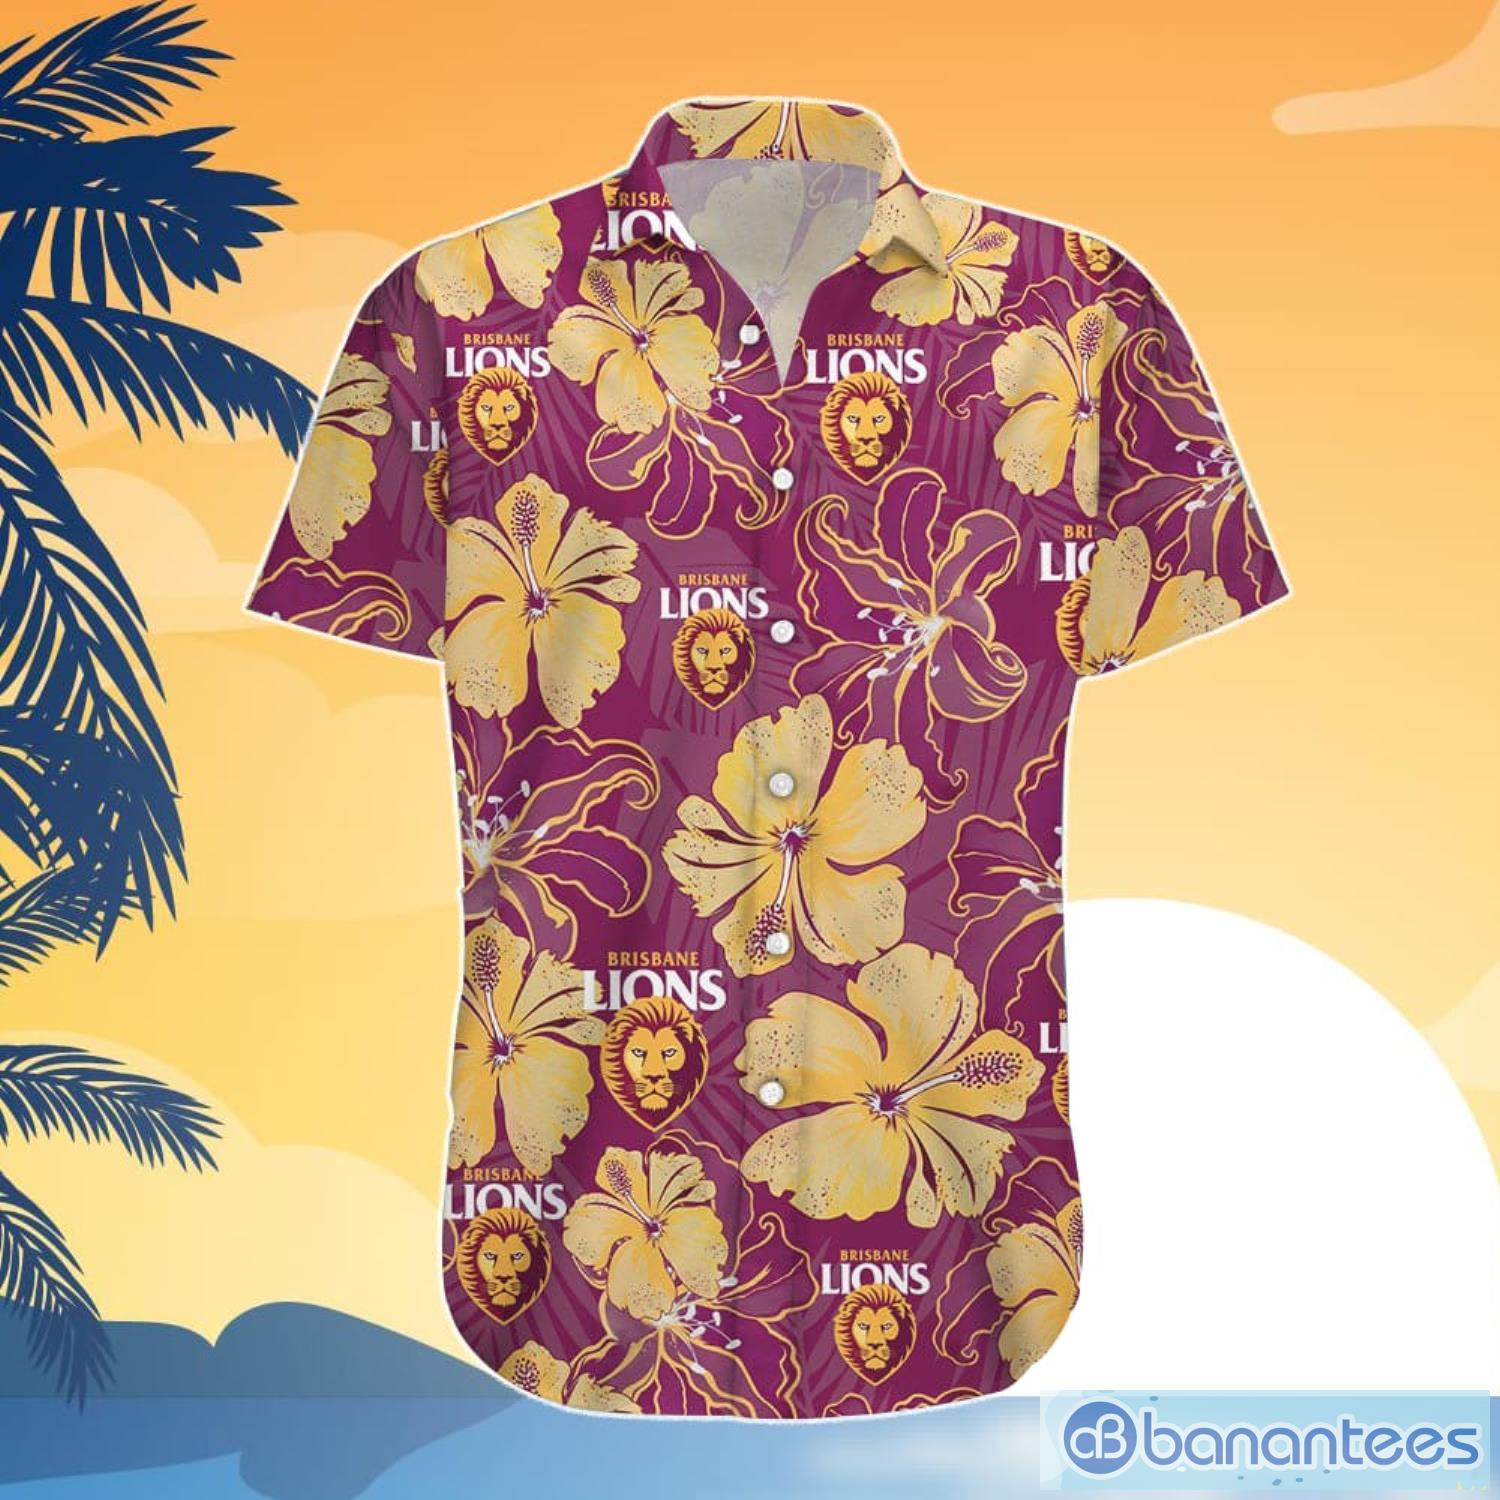 Brisbane Lions Floral Hawaiian Shirt And Shorts - Brisbane Lions Floral Hawaiian Shirt_4